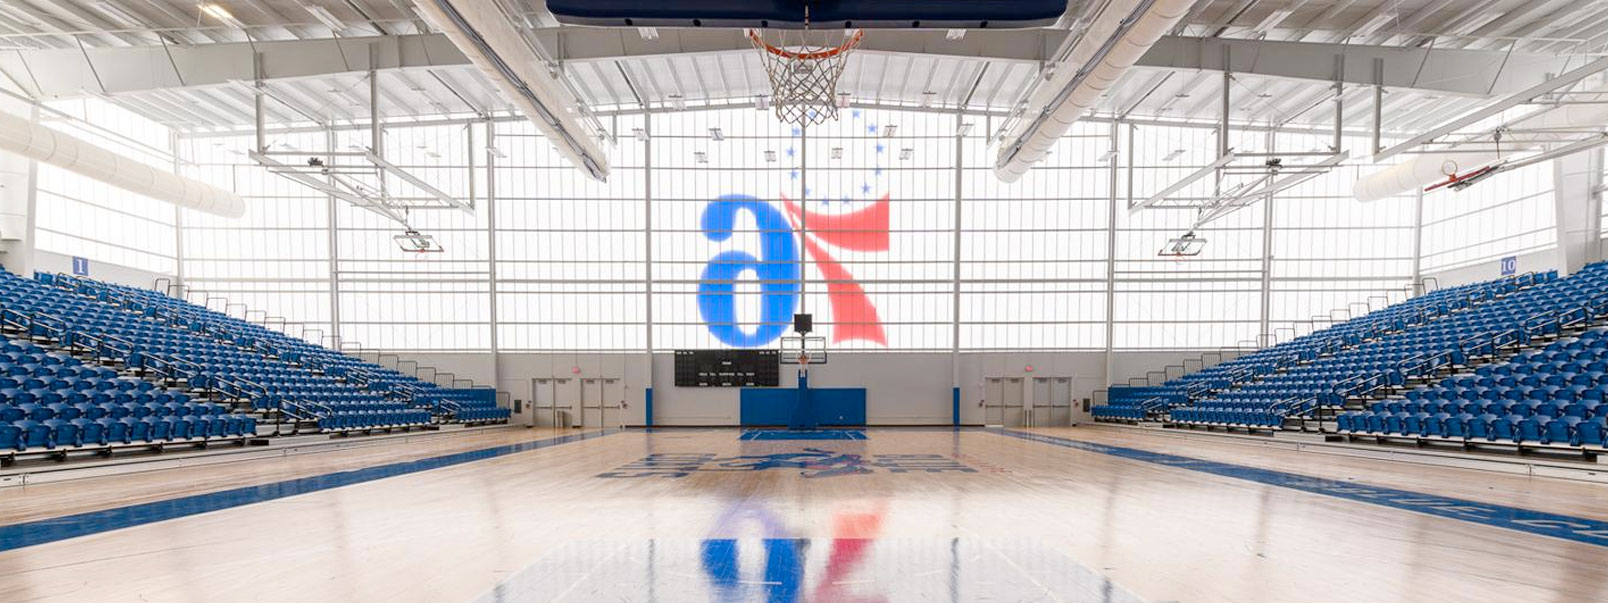 basketball facility